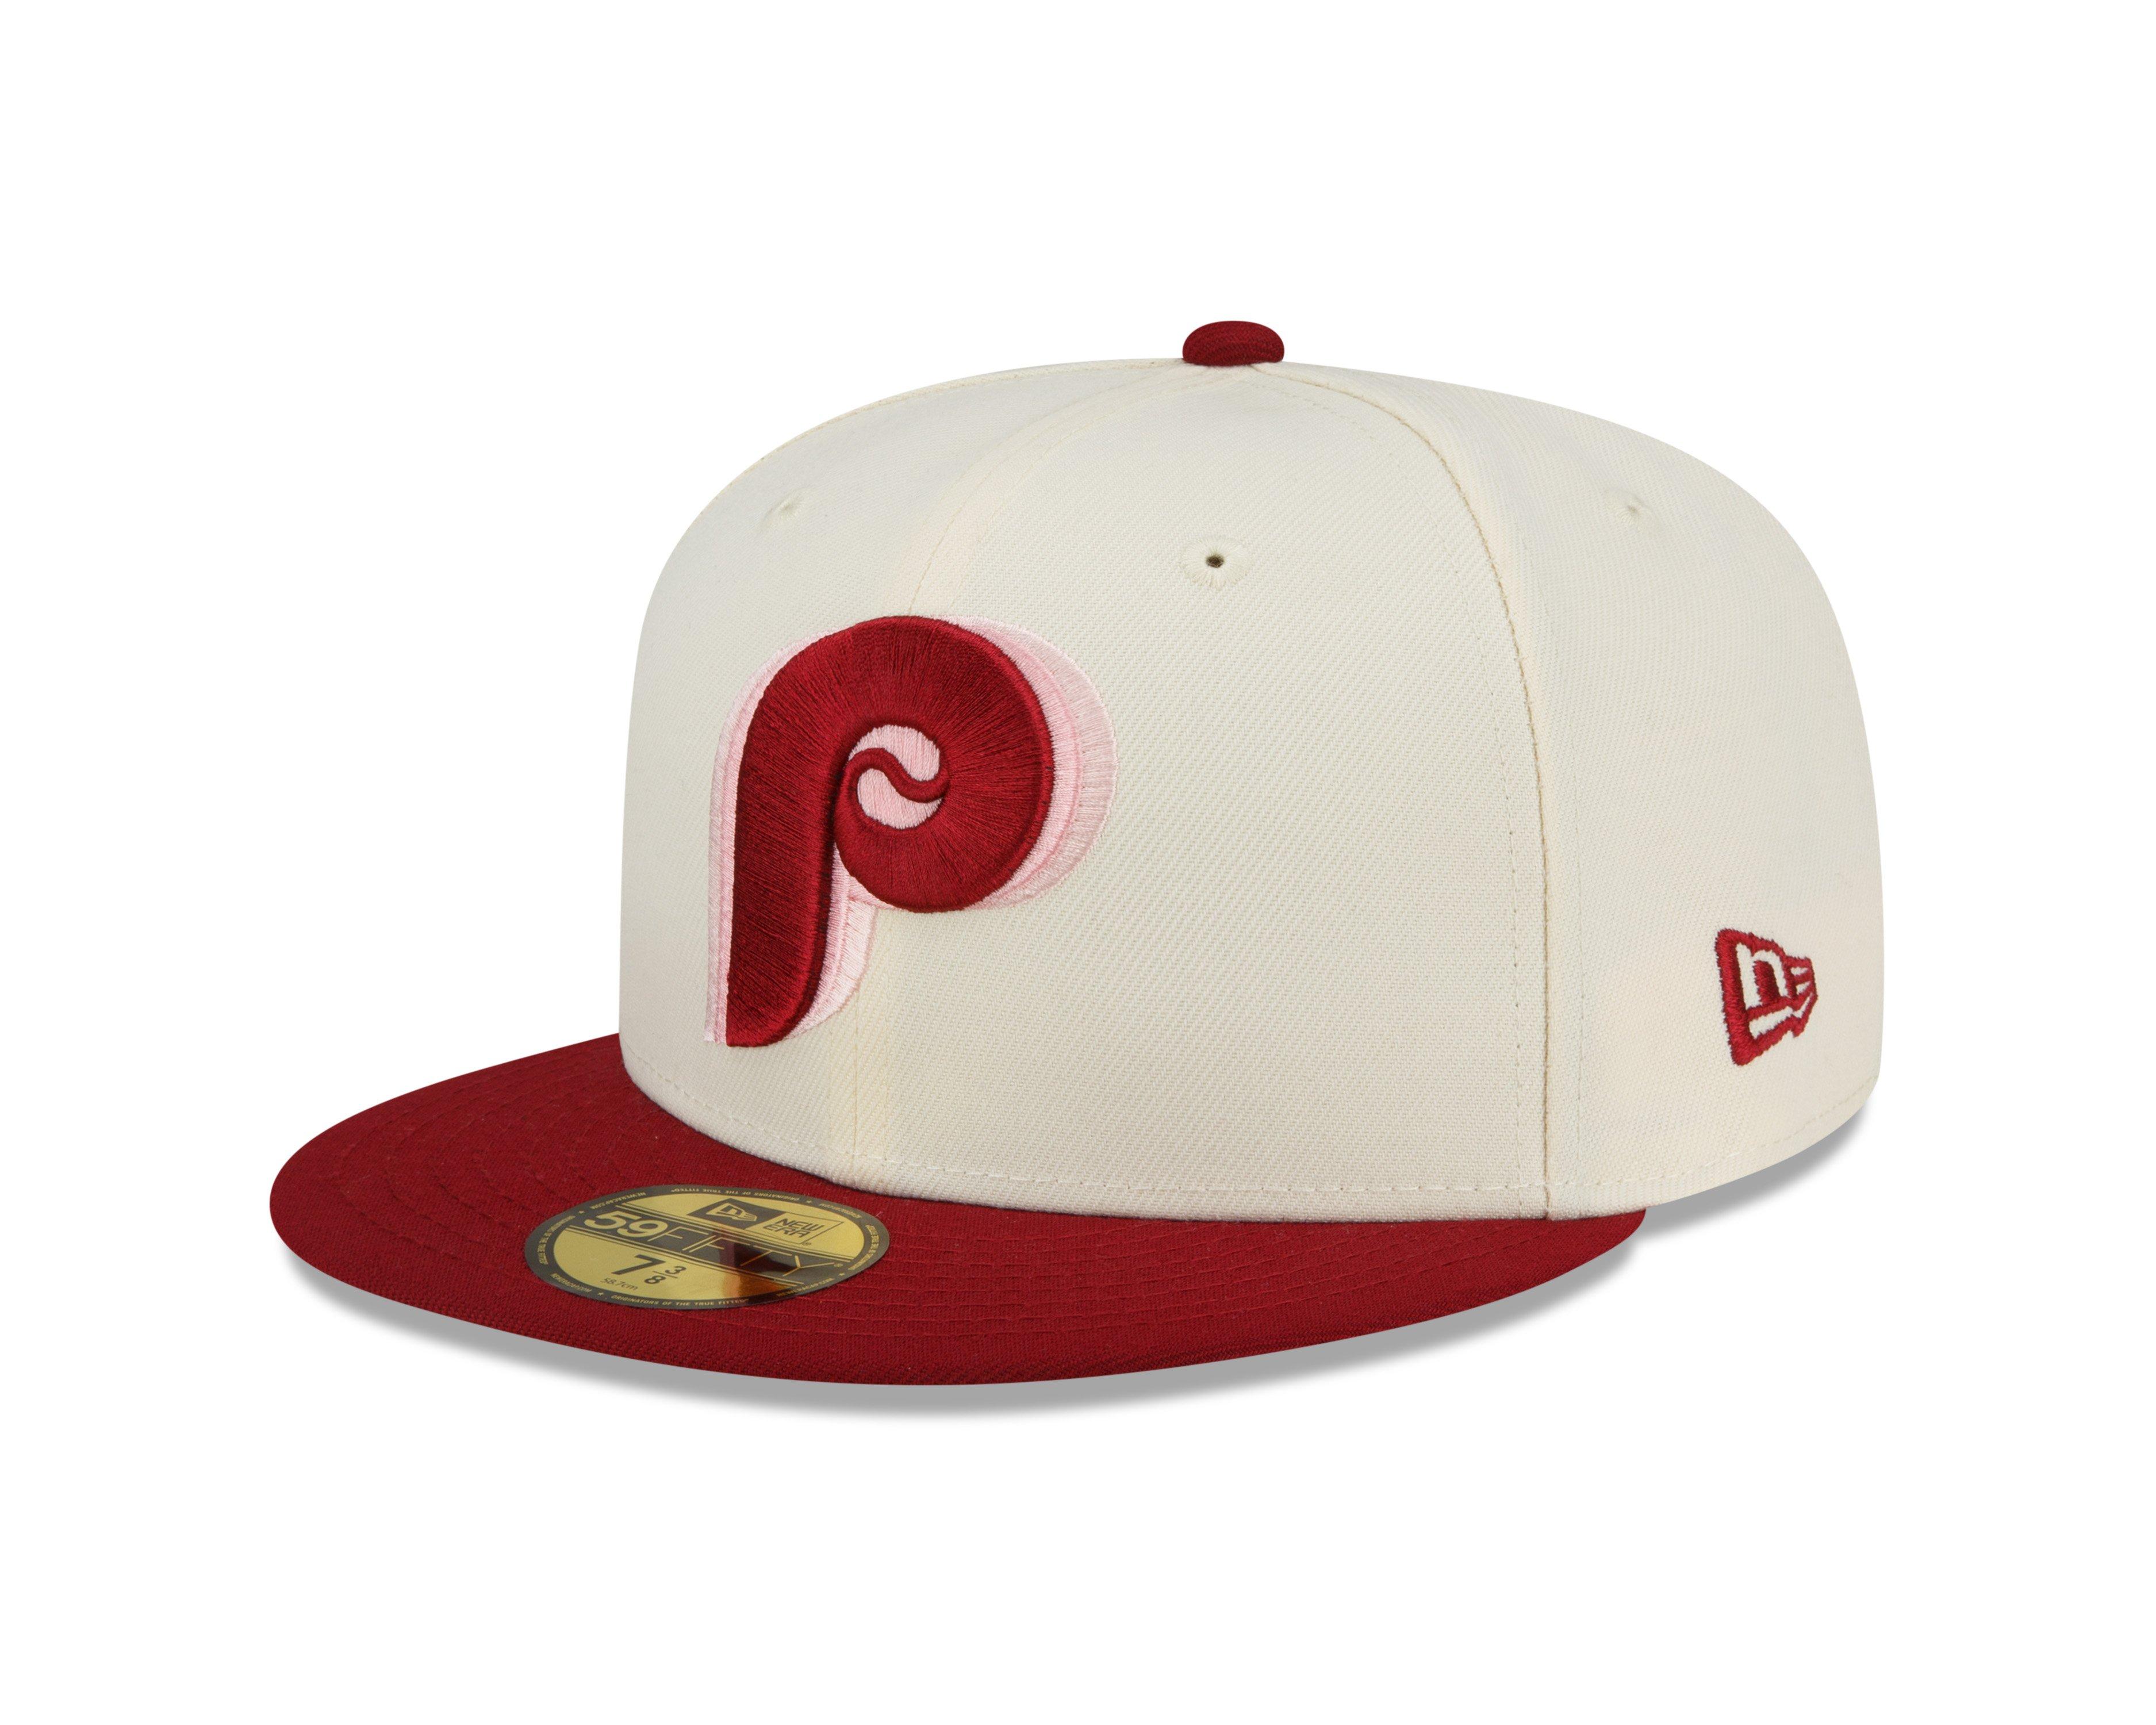  Youth Philadelphia Phillies Home Red Hat Cap MLB